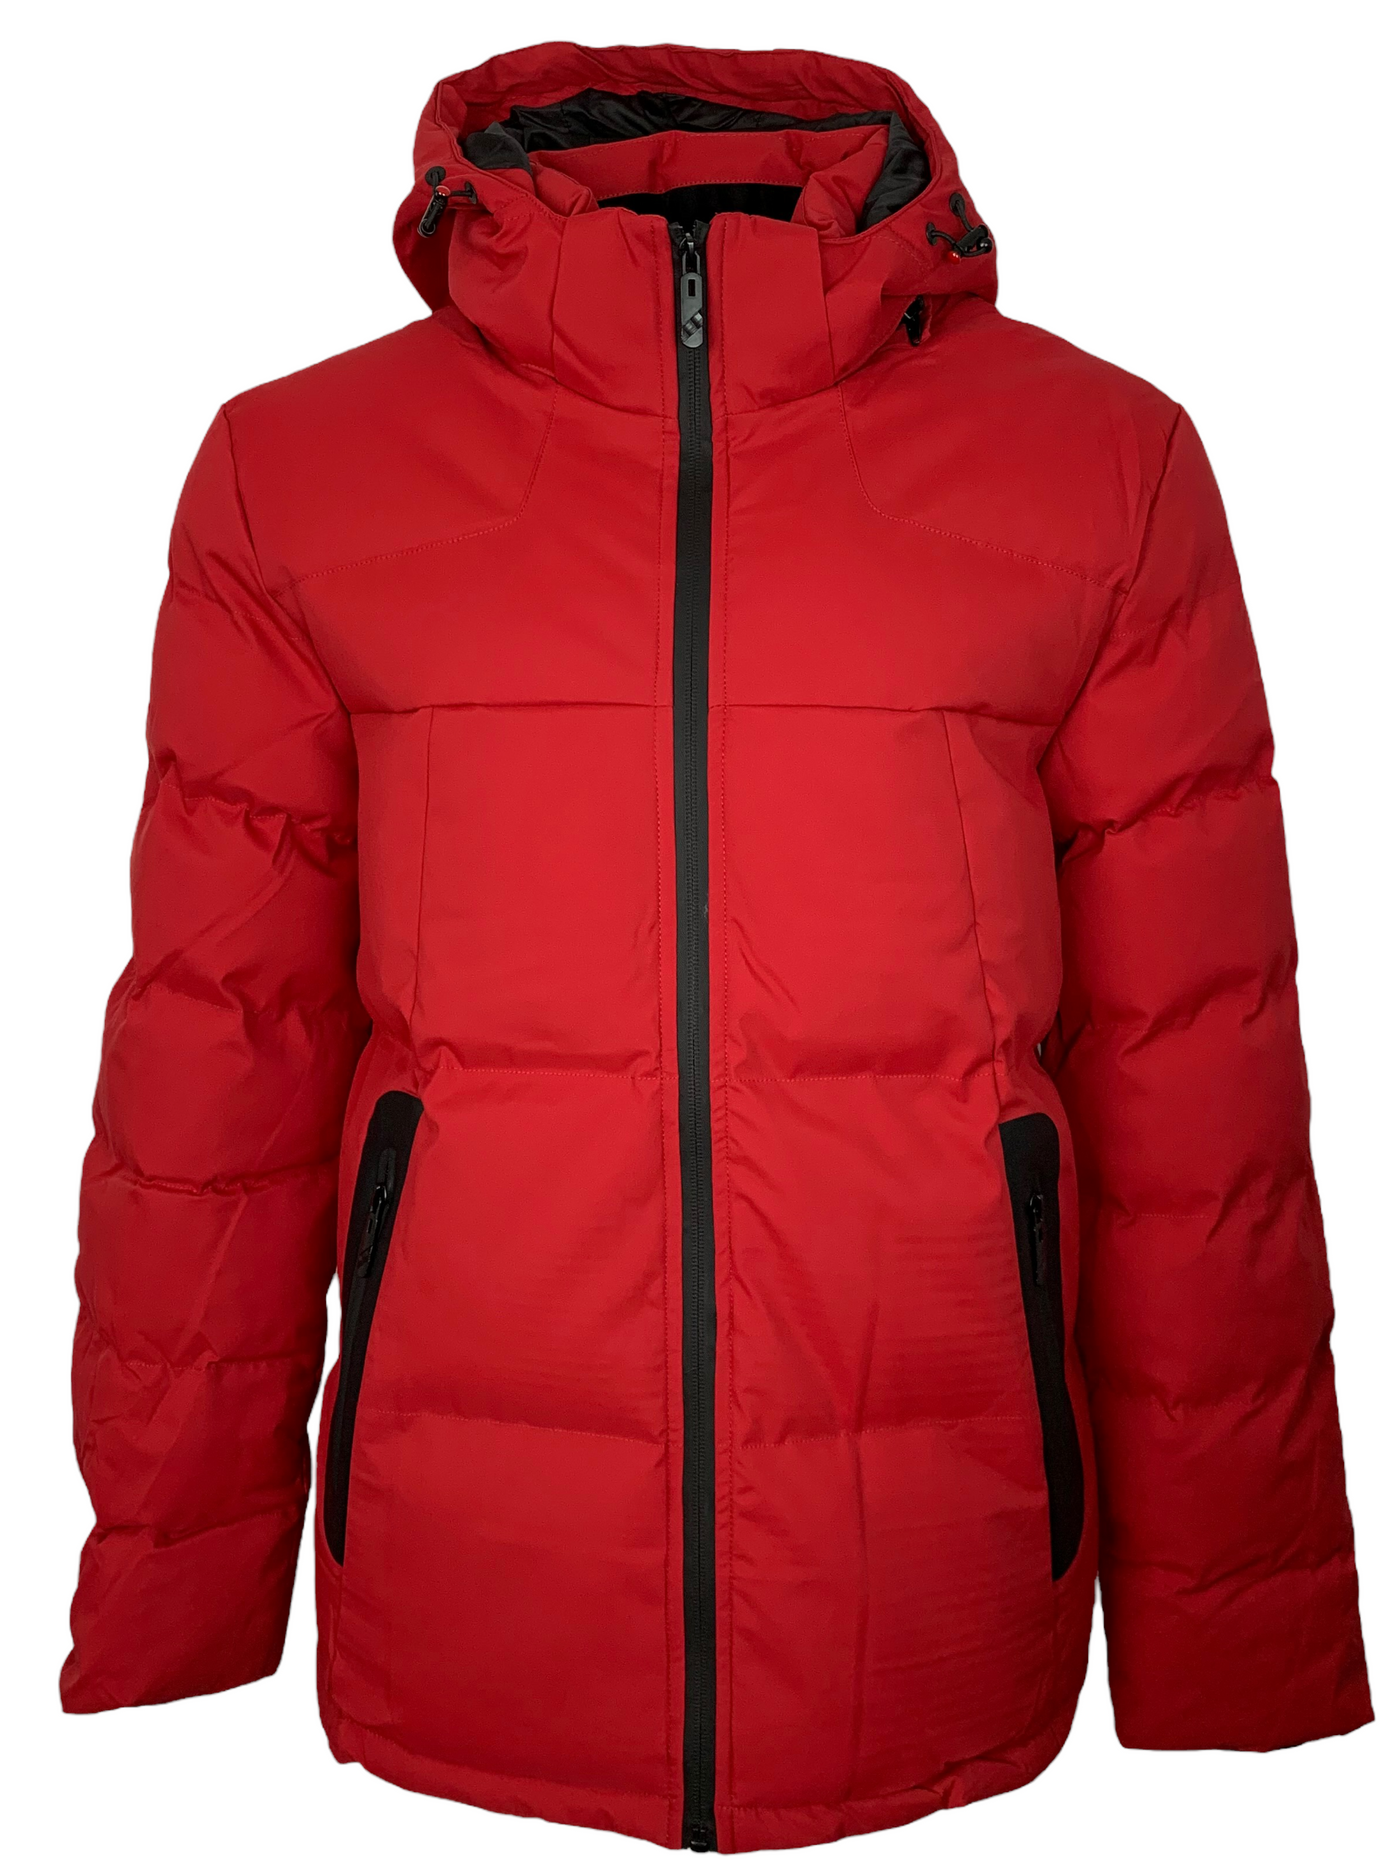 Manteau rouge hydrofuge